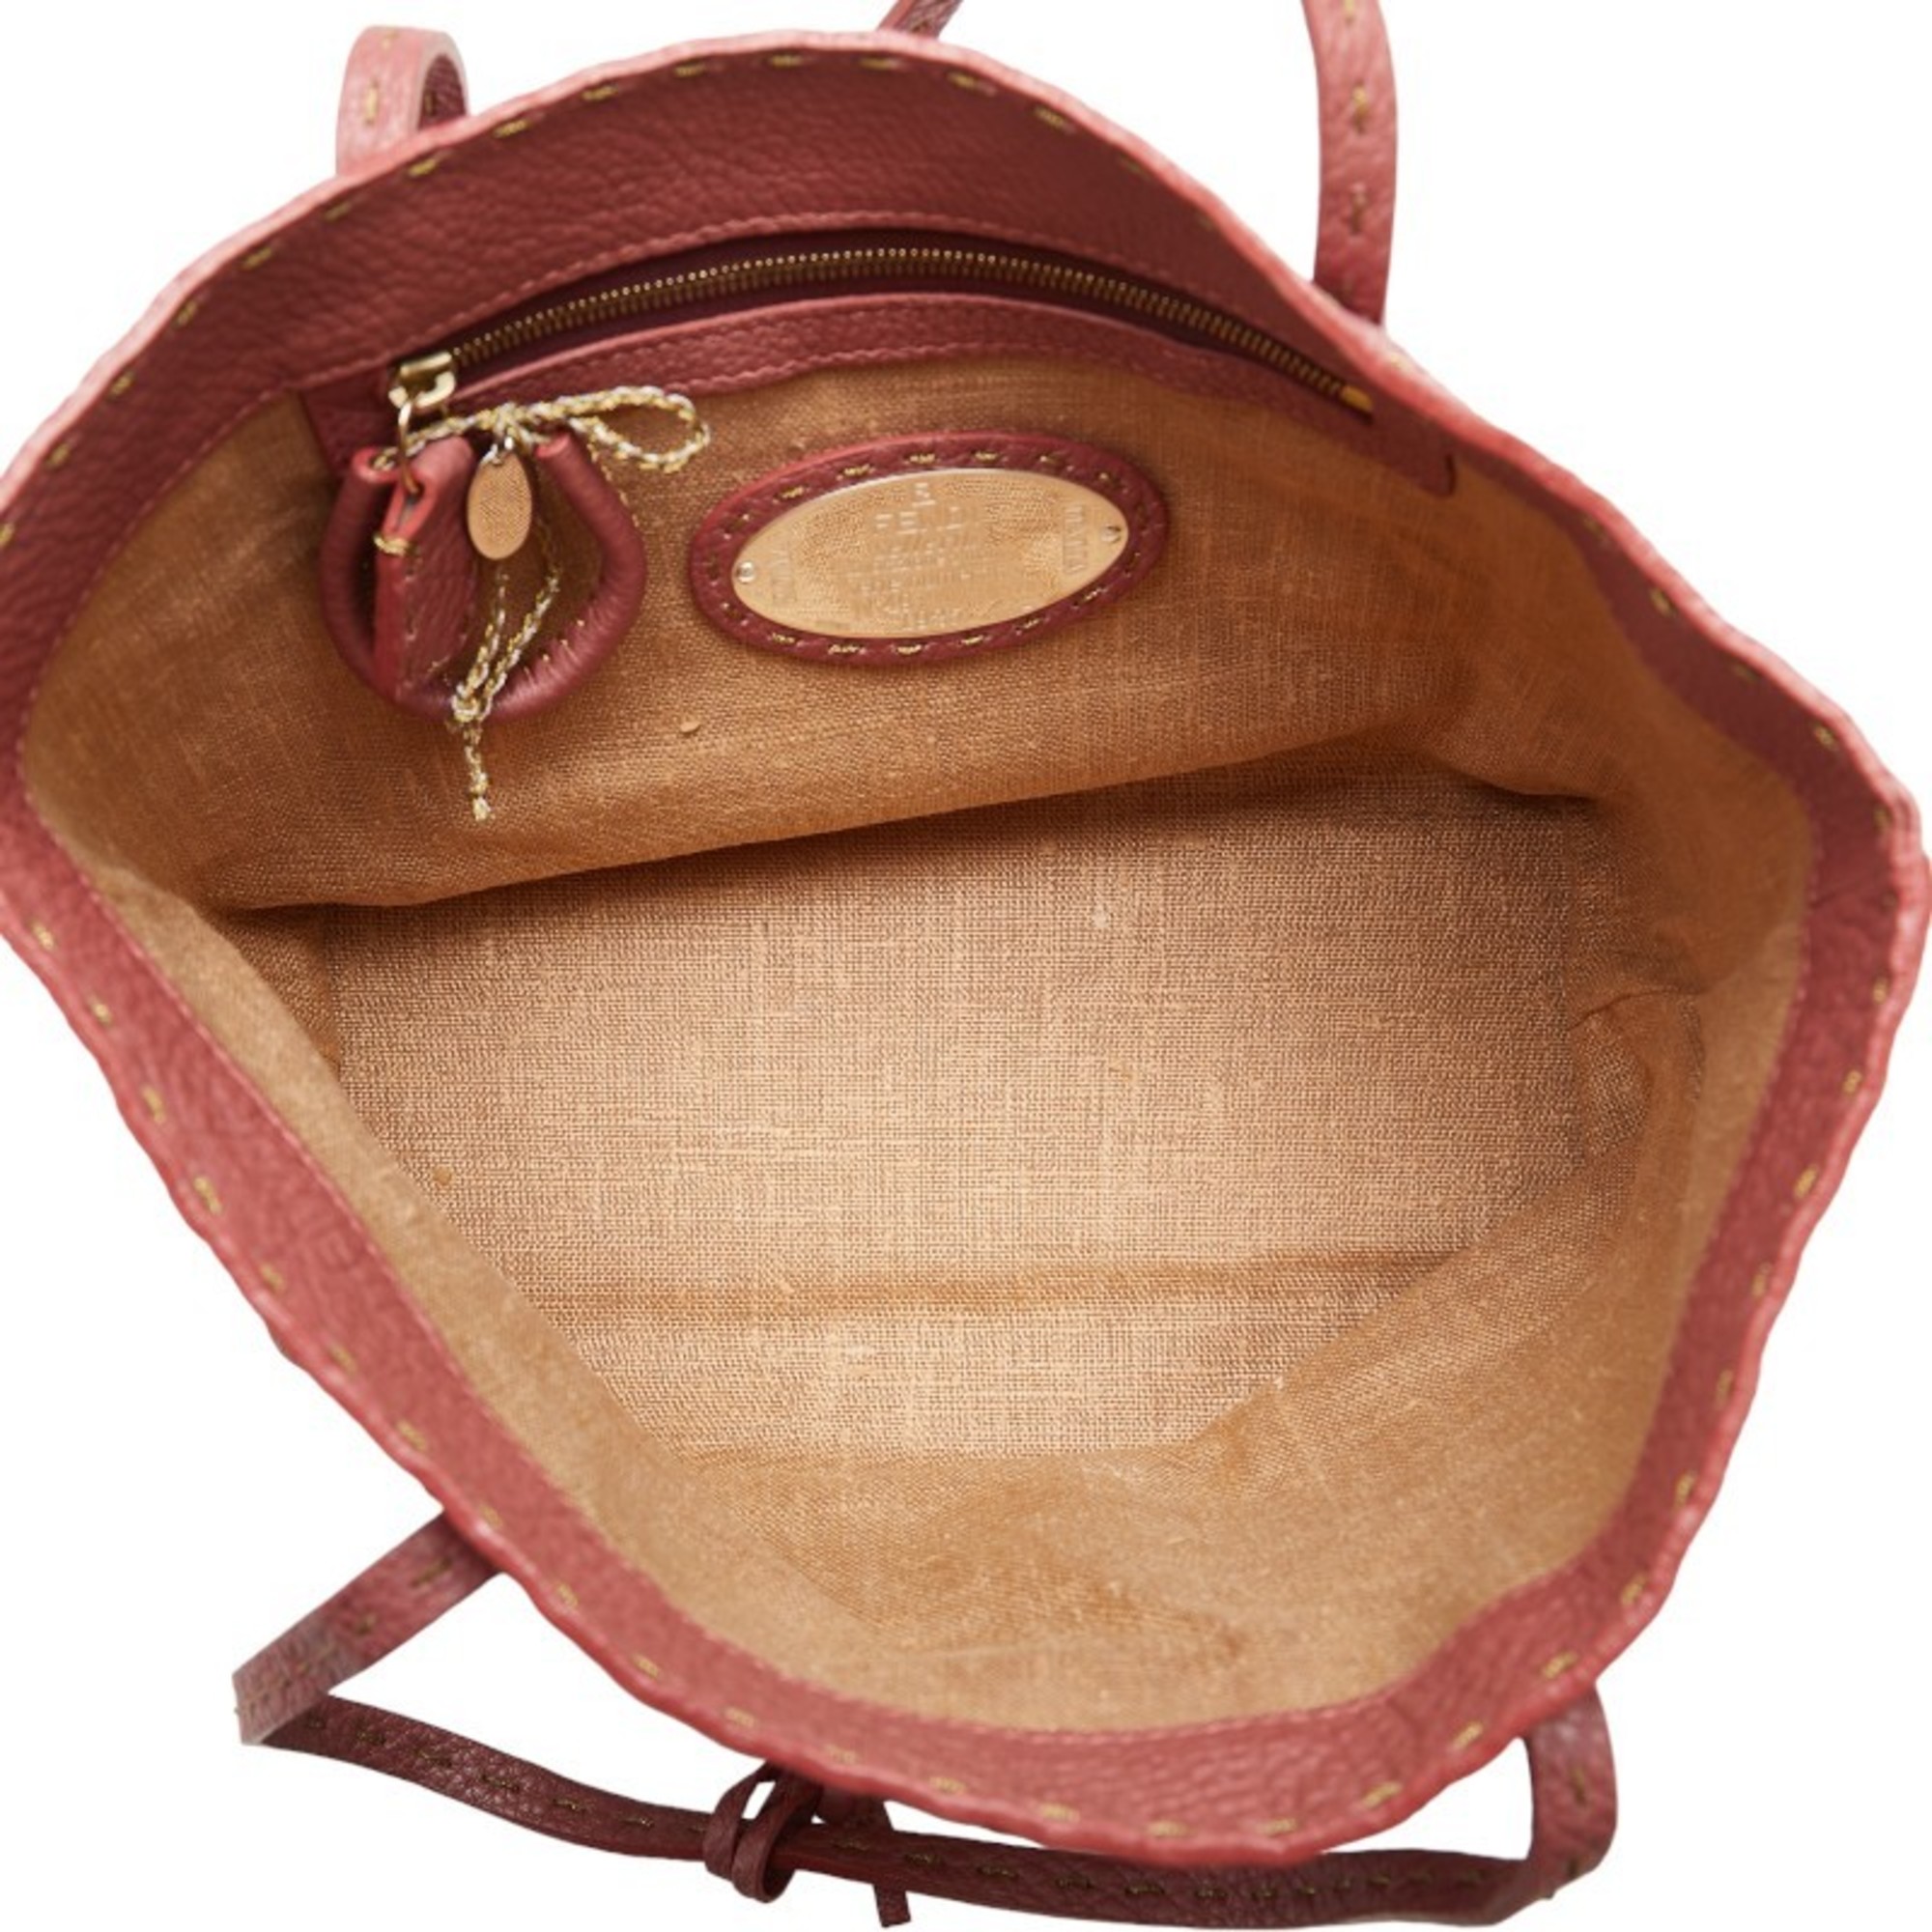 FENDI Selleria Tote Bag Handbag 8BH099 Pink Leather Women's